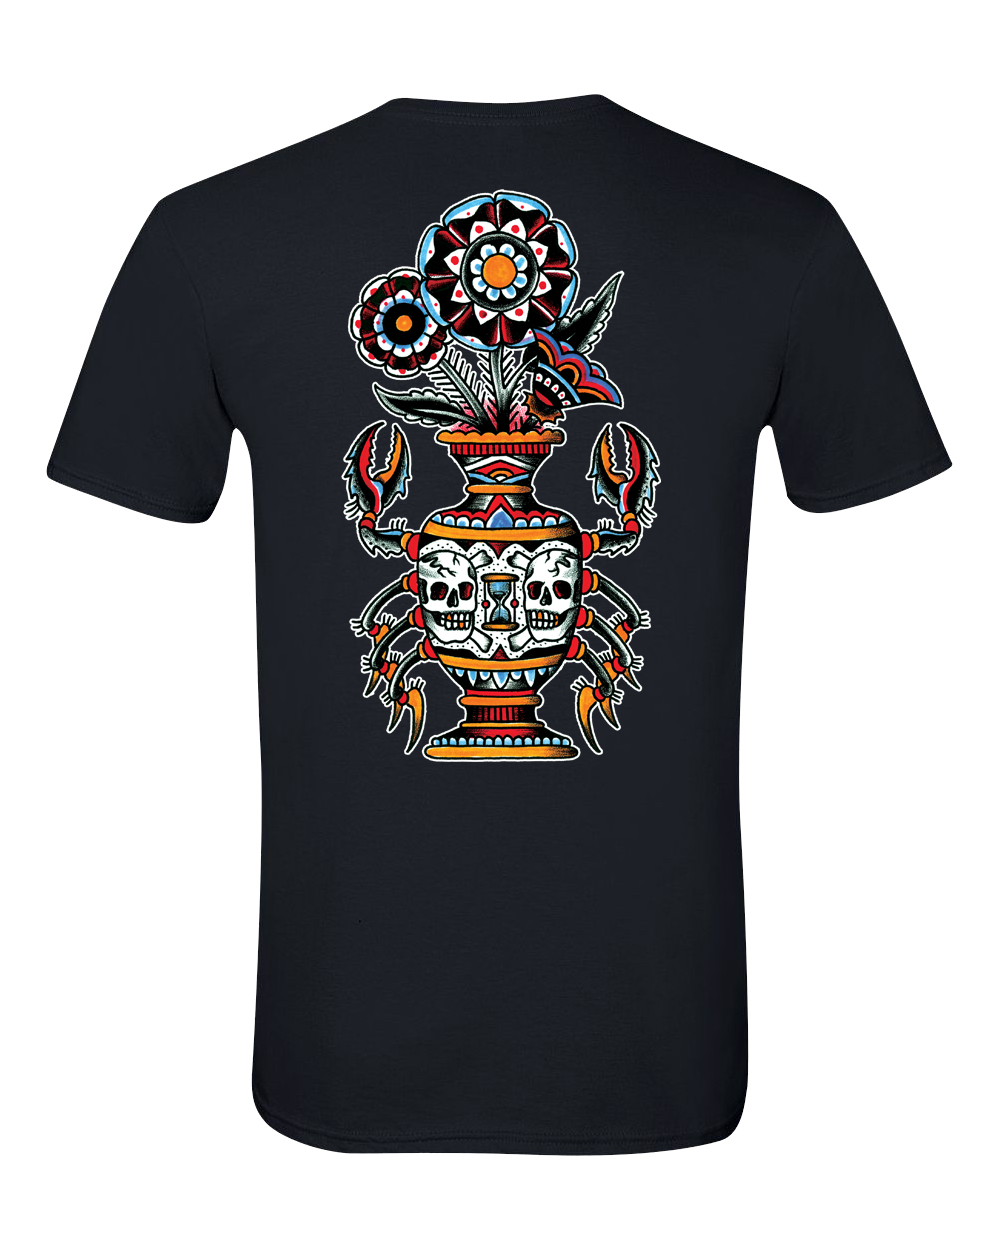 Marcus Dove “Lobster Vase” Unisex T-Shirt